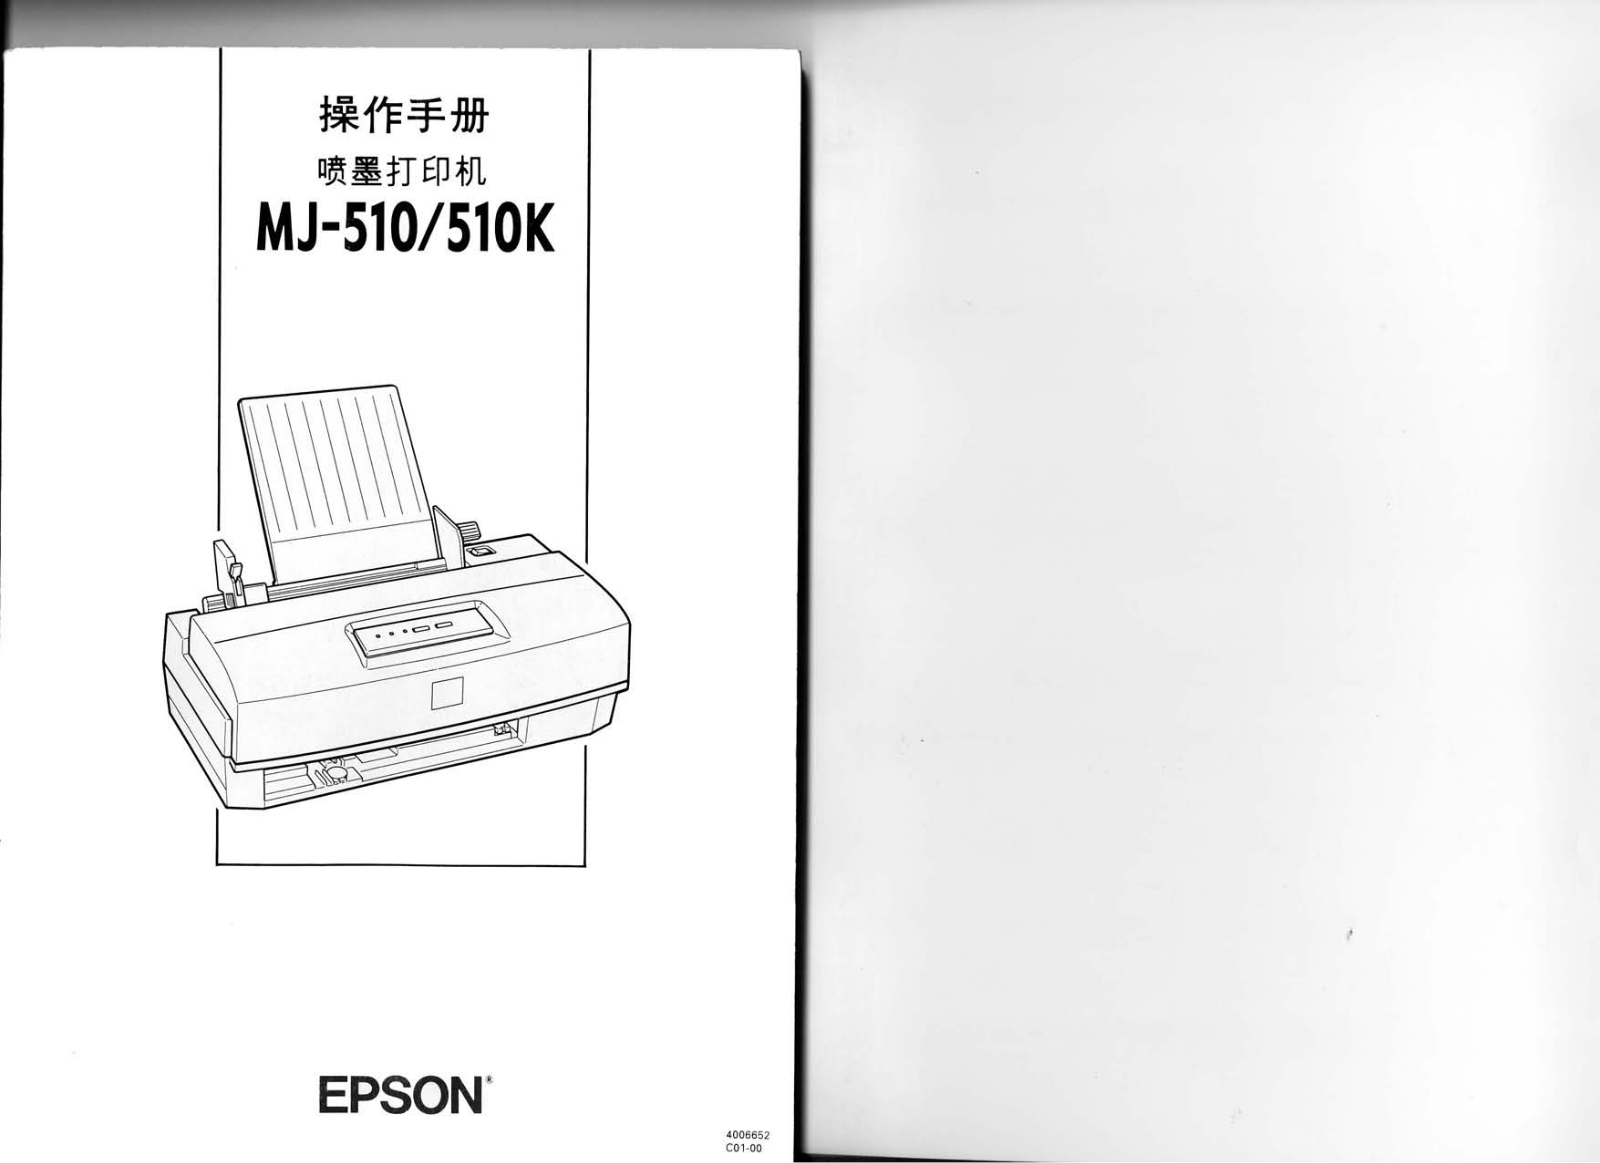 Epson STYLUS MJ-510K, STYLUS  MJ-510 User Manual